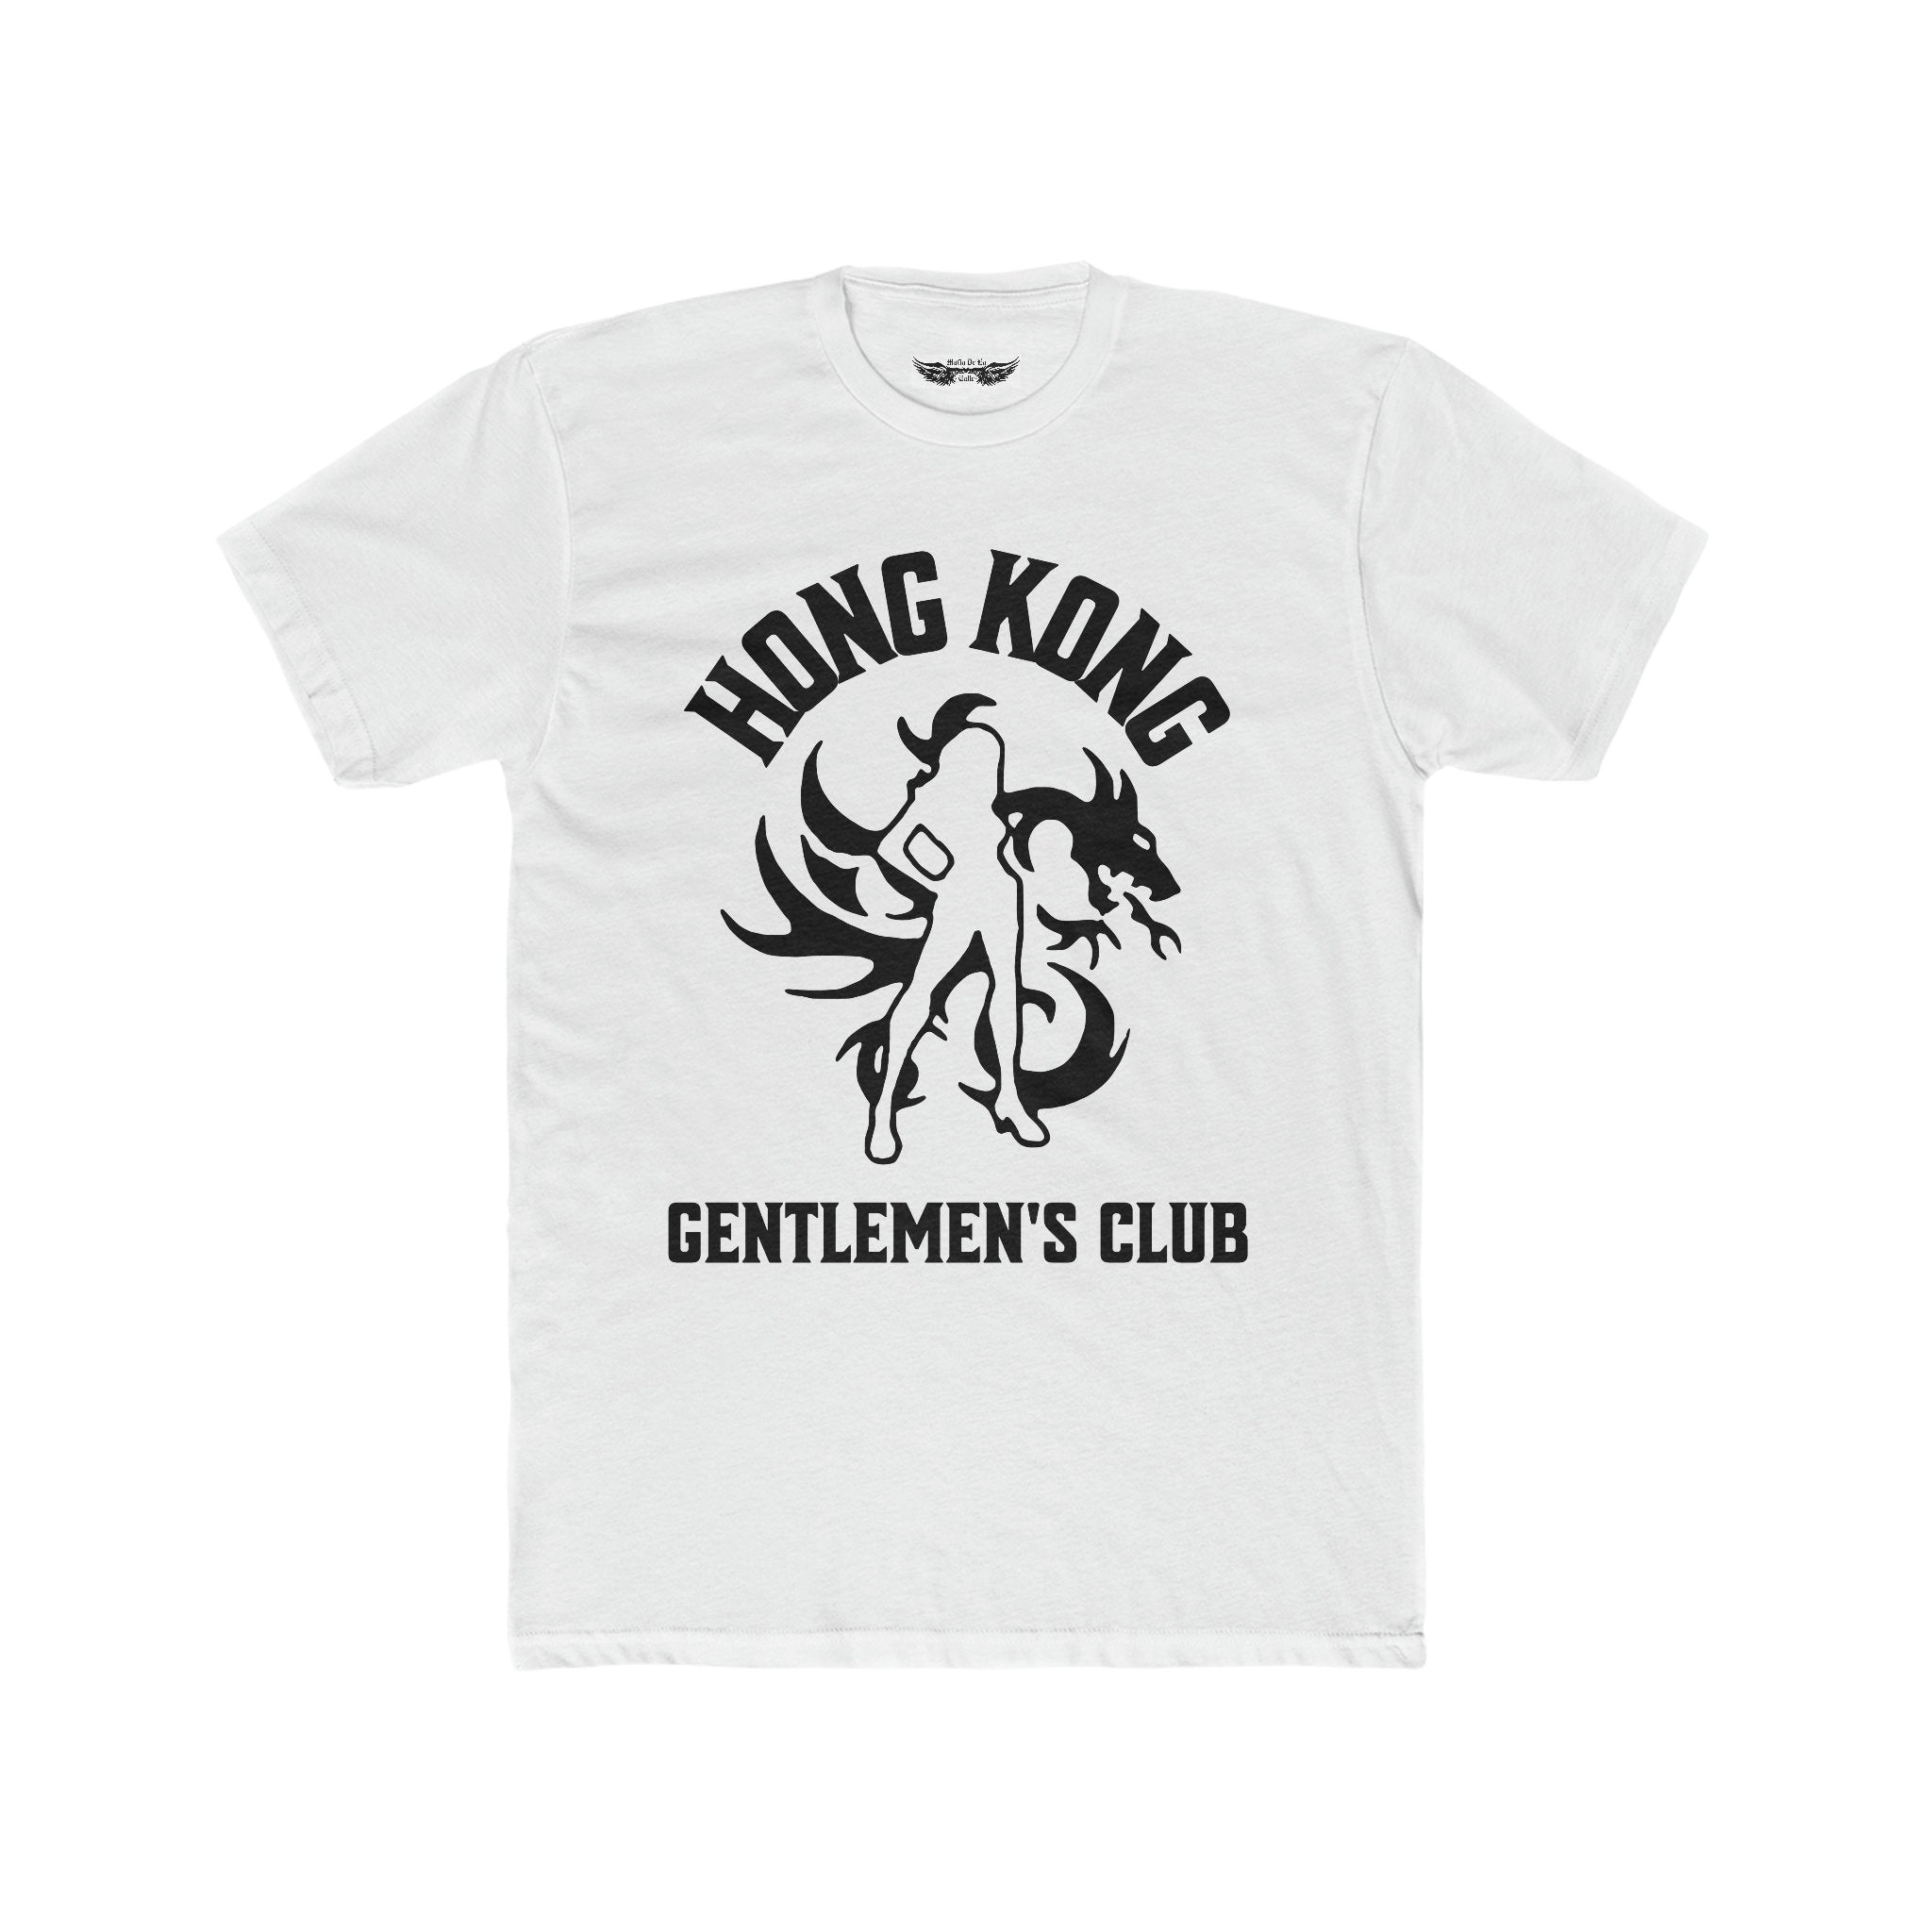 albert kueh recommends hong kong gentlemens club pic